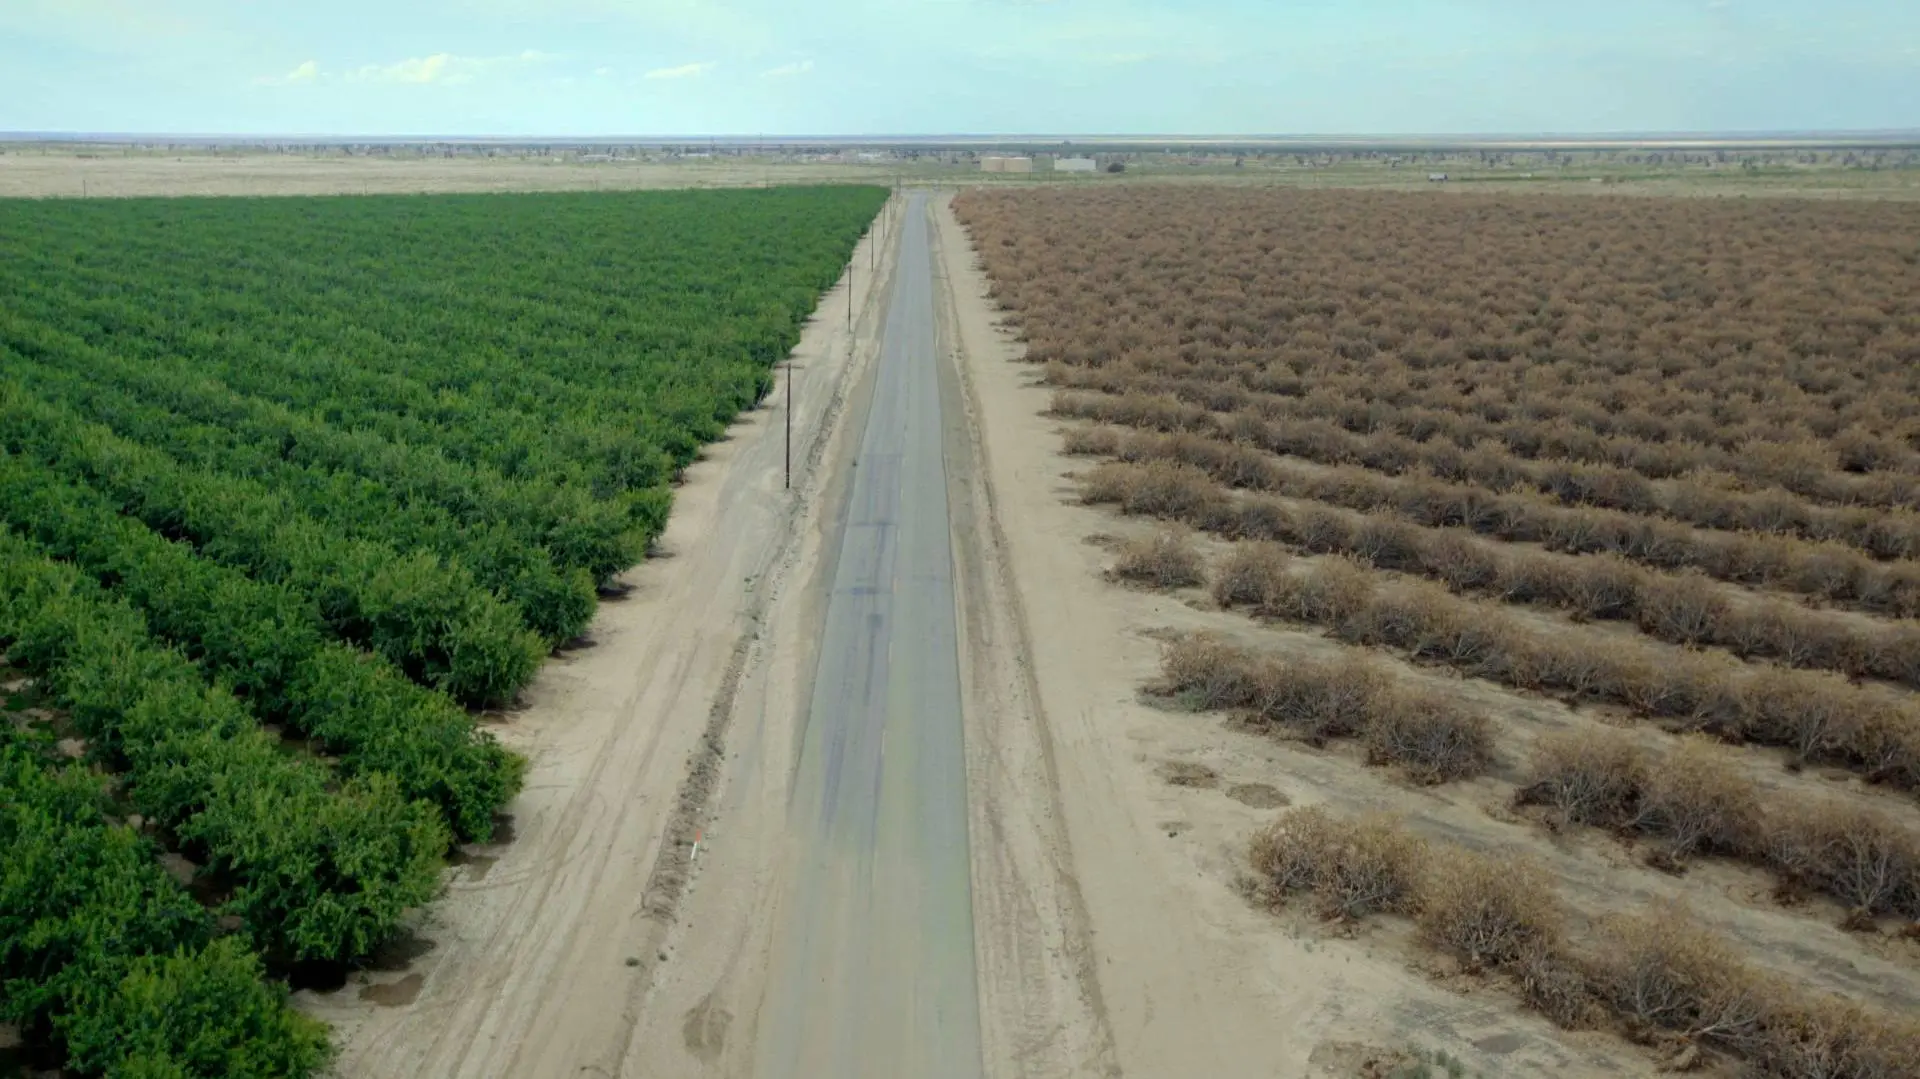 Water & Power: A California Heist_peliplat